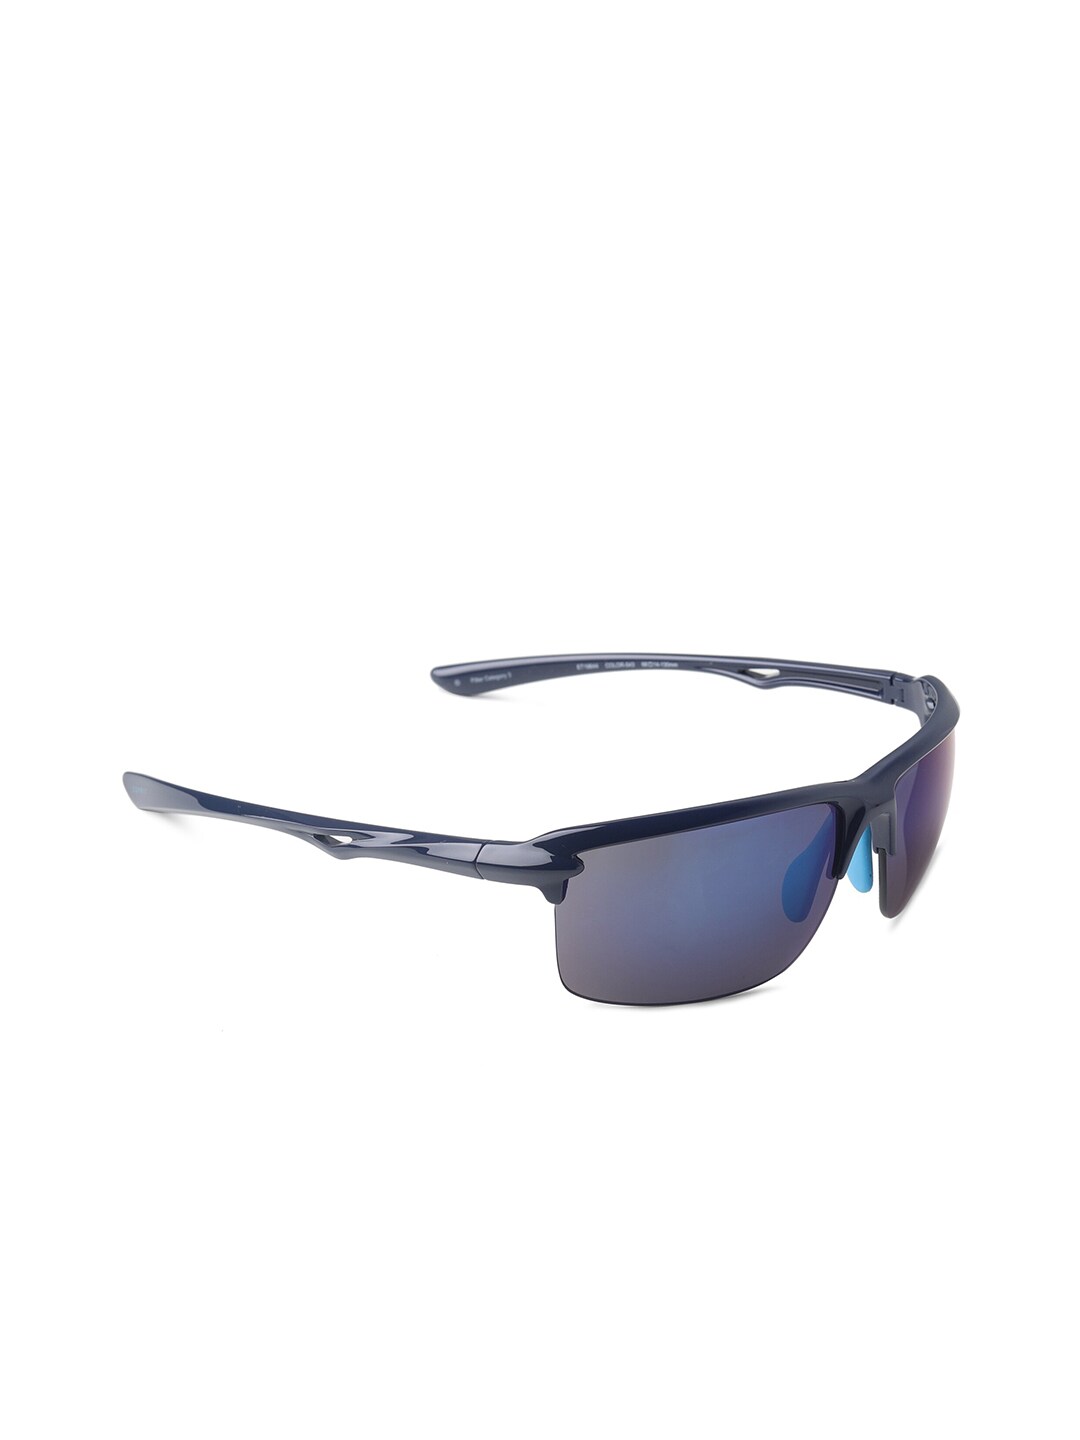 ESPRIT Unisex Blue Lens & Blue Shield Sunglasses with UV Protected Lens ET19644-66-543 Price in India